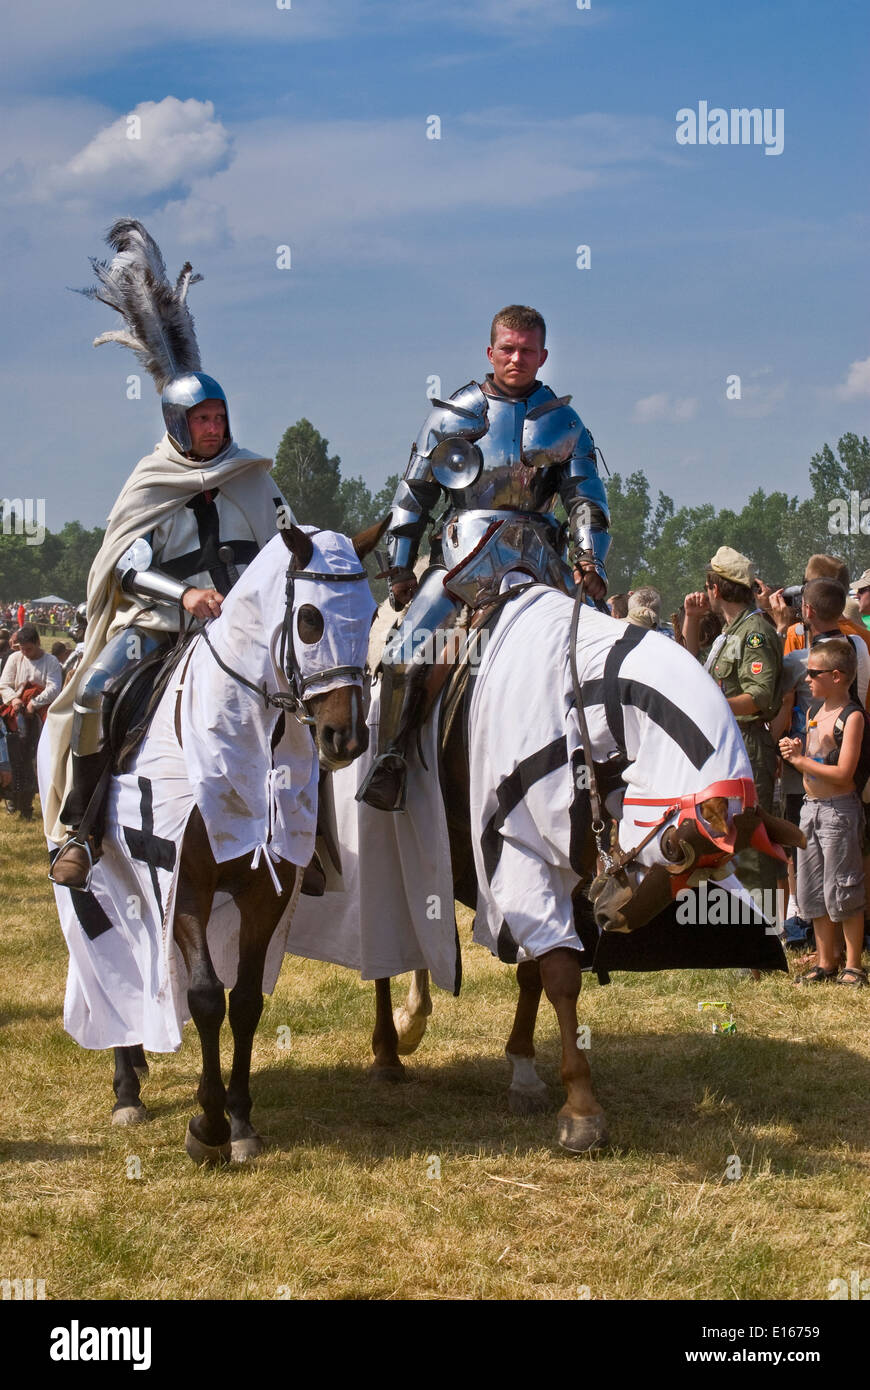 Reenactors at annual recreation of Battle of Grunwald of 1410, near village of Grunwald, Poland Stock Photo